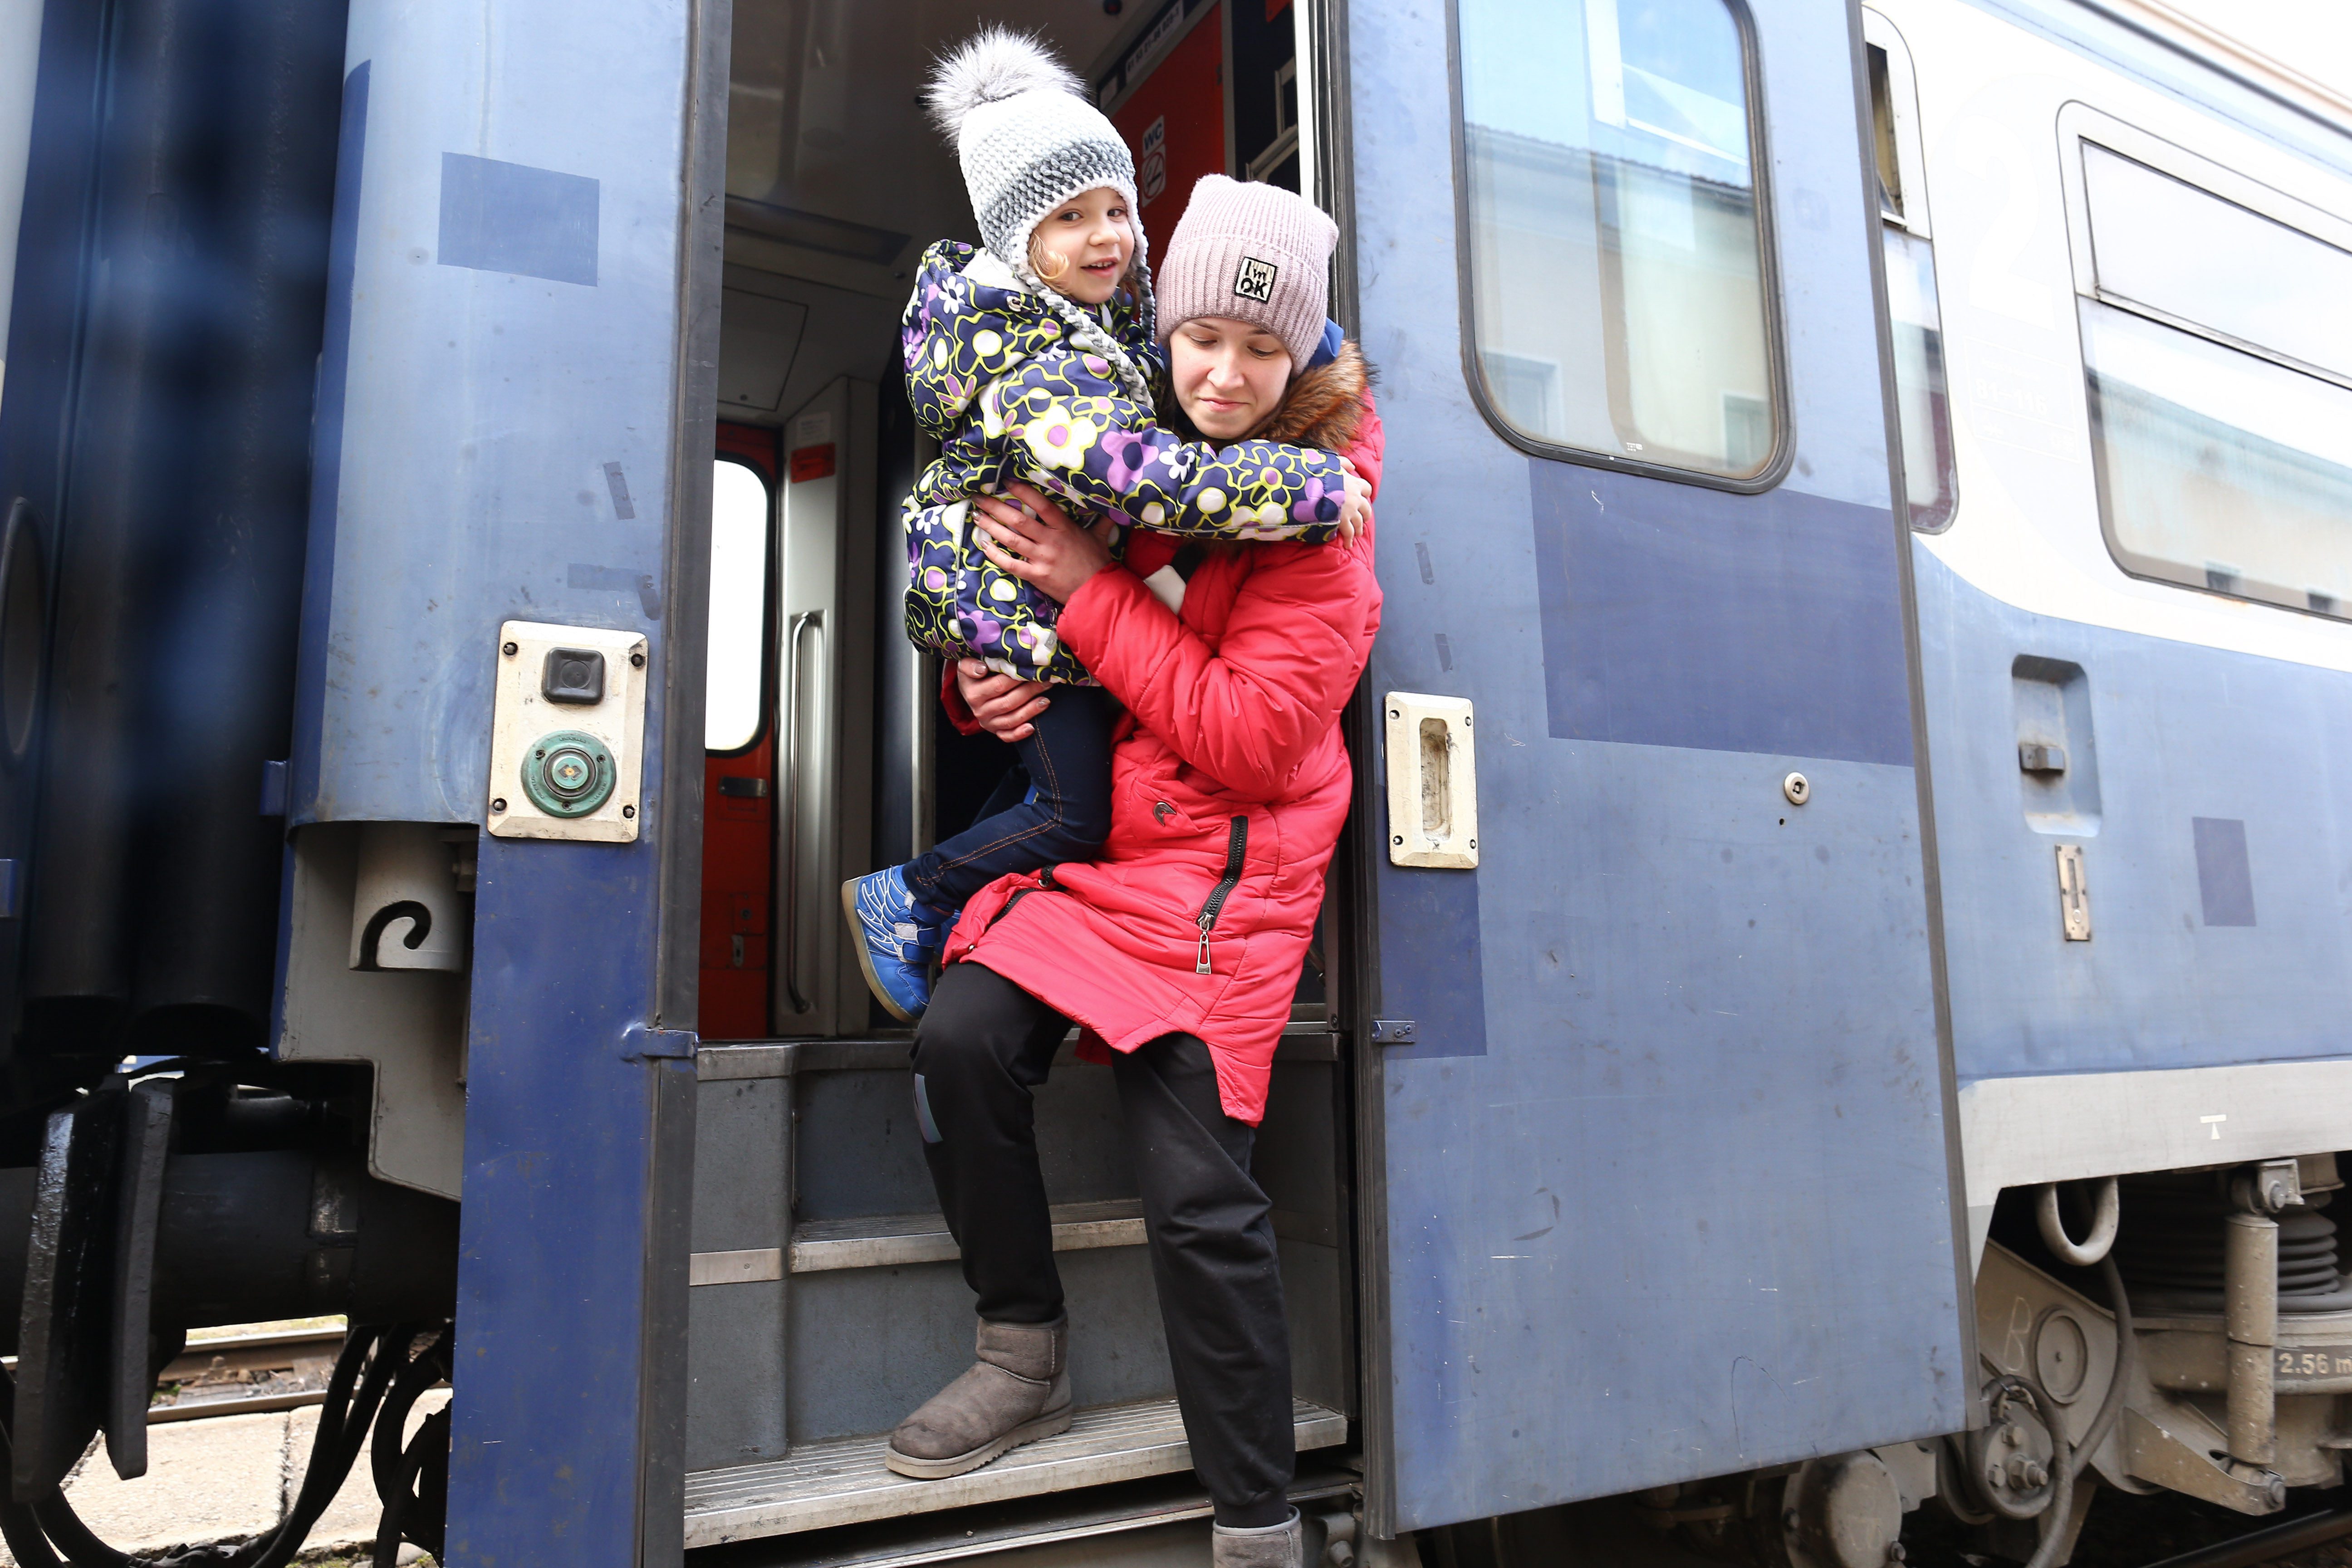 Ukrainian refugees entering Romania via train